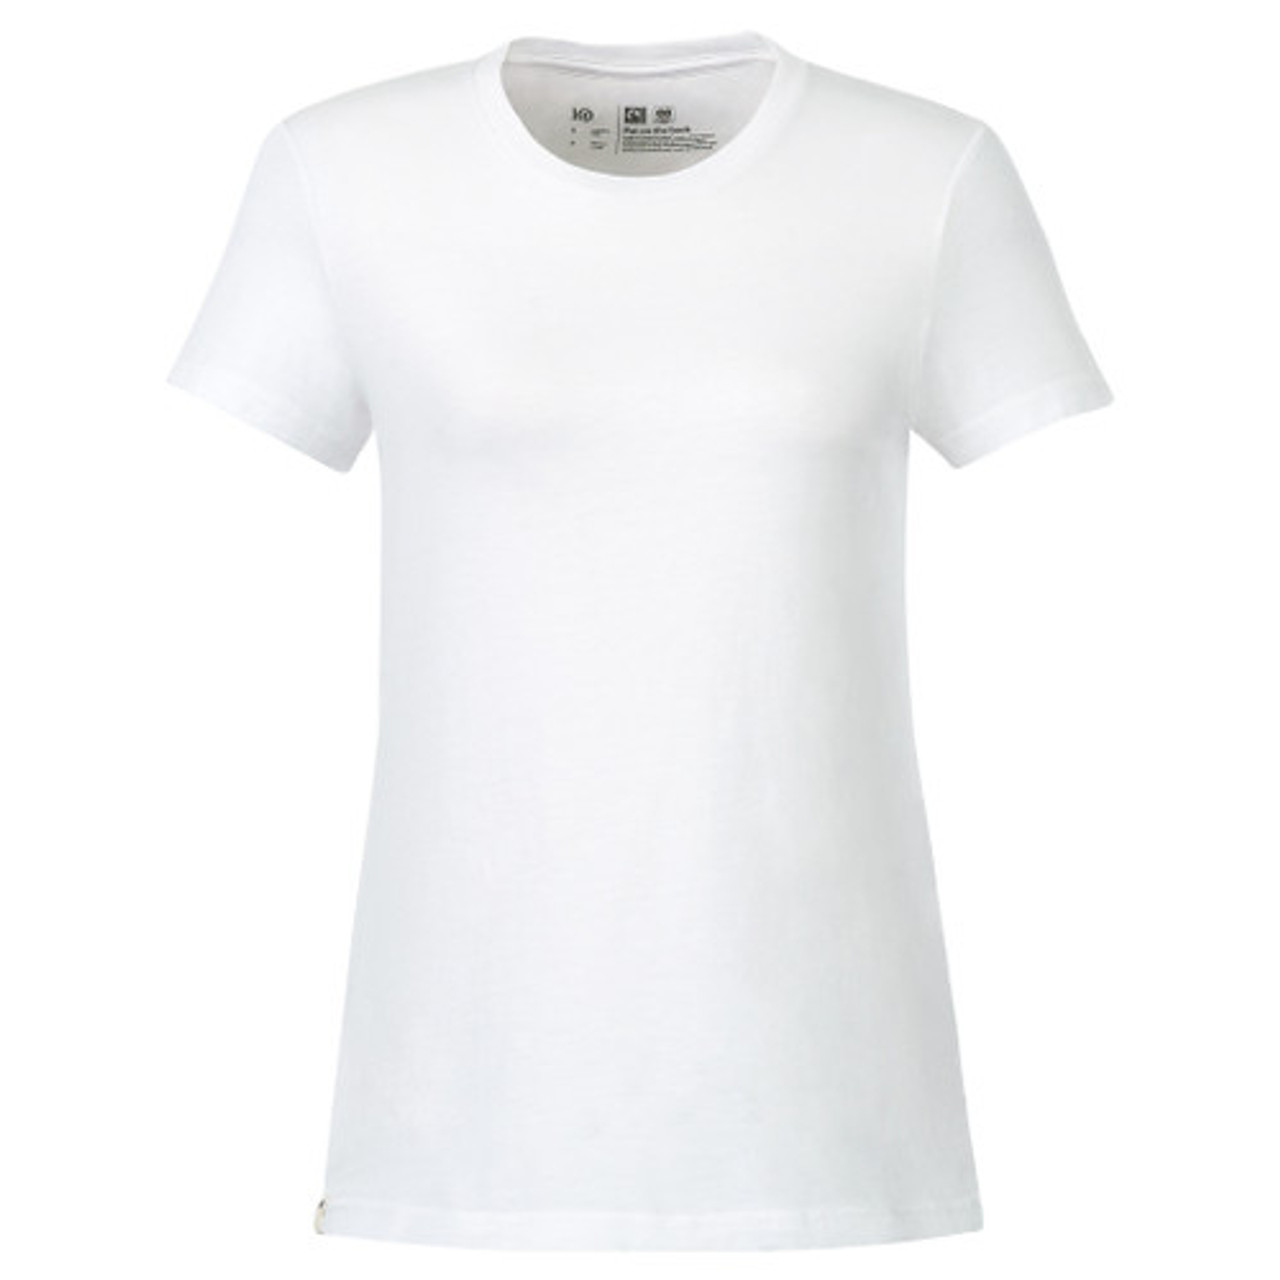 Buy NENCY Women's Printed Regular Fit Short Sleeves Cotton T-Shirt